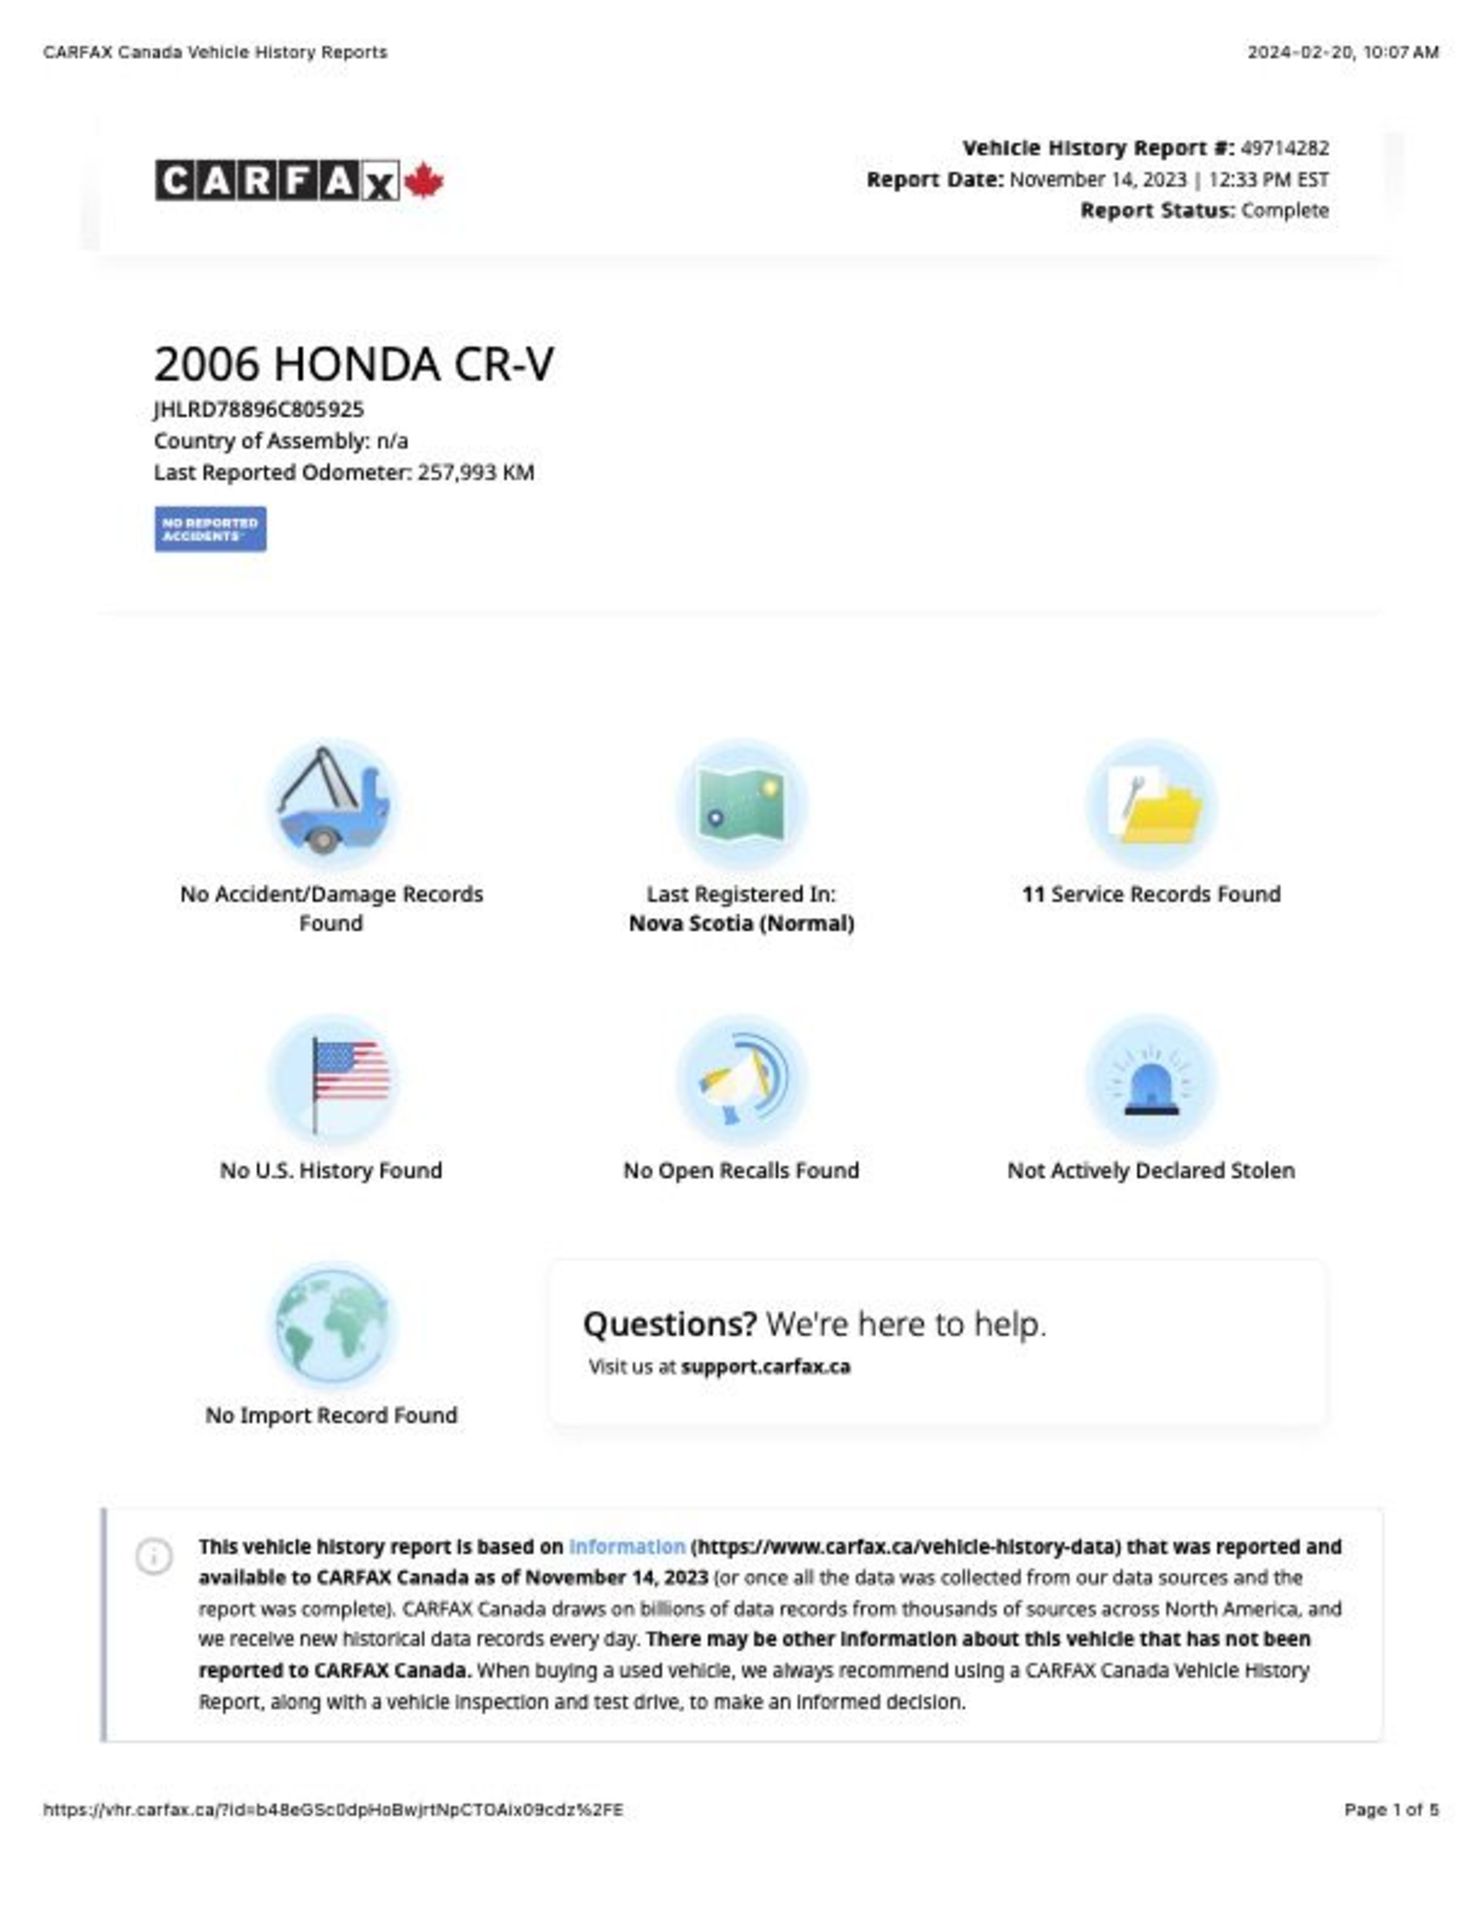 2006 Honda CR-V EX - Image 12 of 13